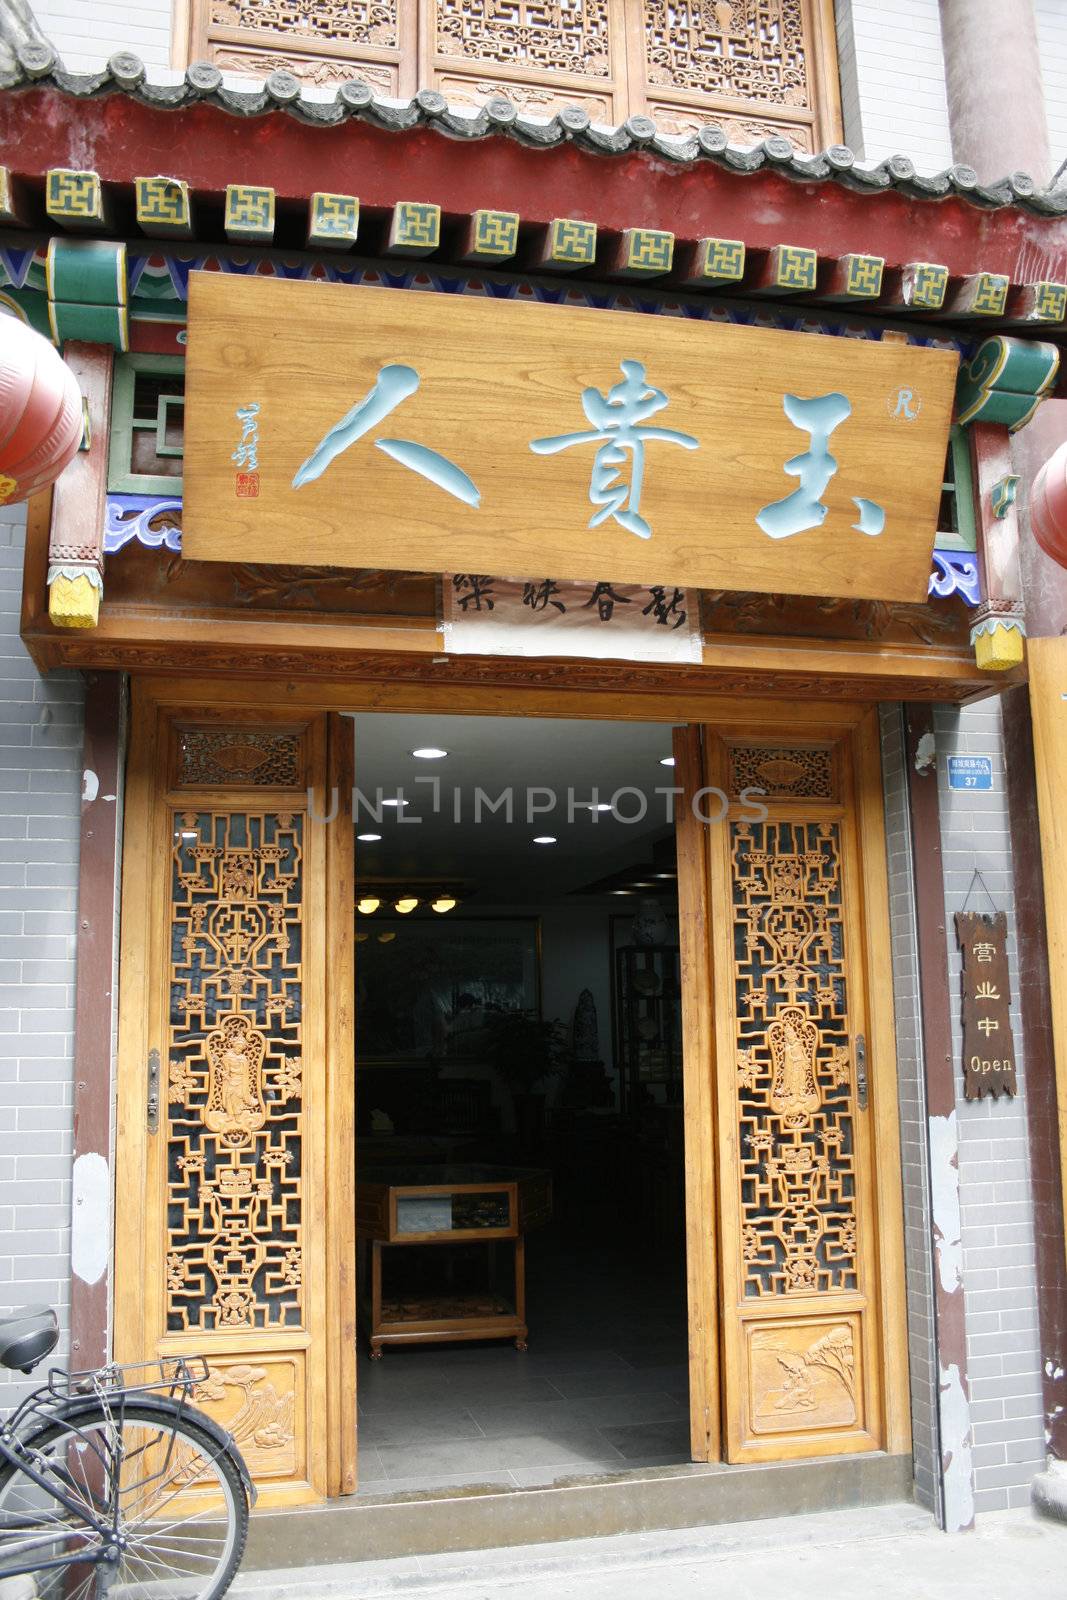 downtown of Xian, Wooden door in the old town by koep